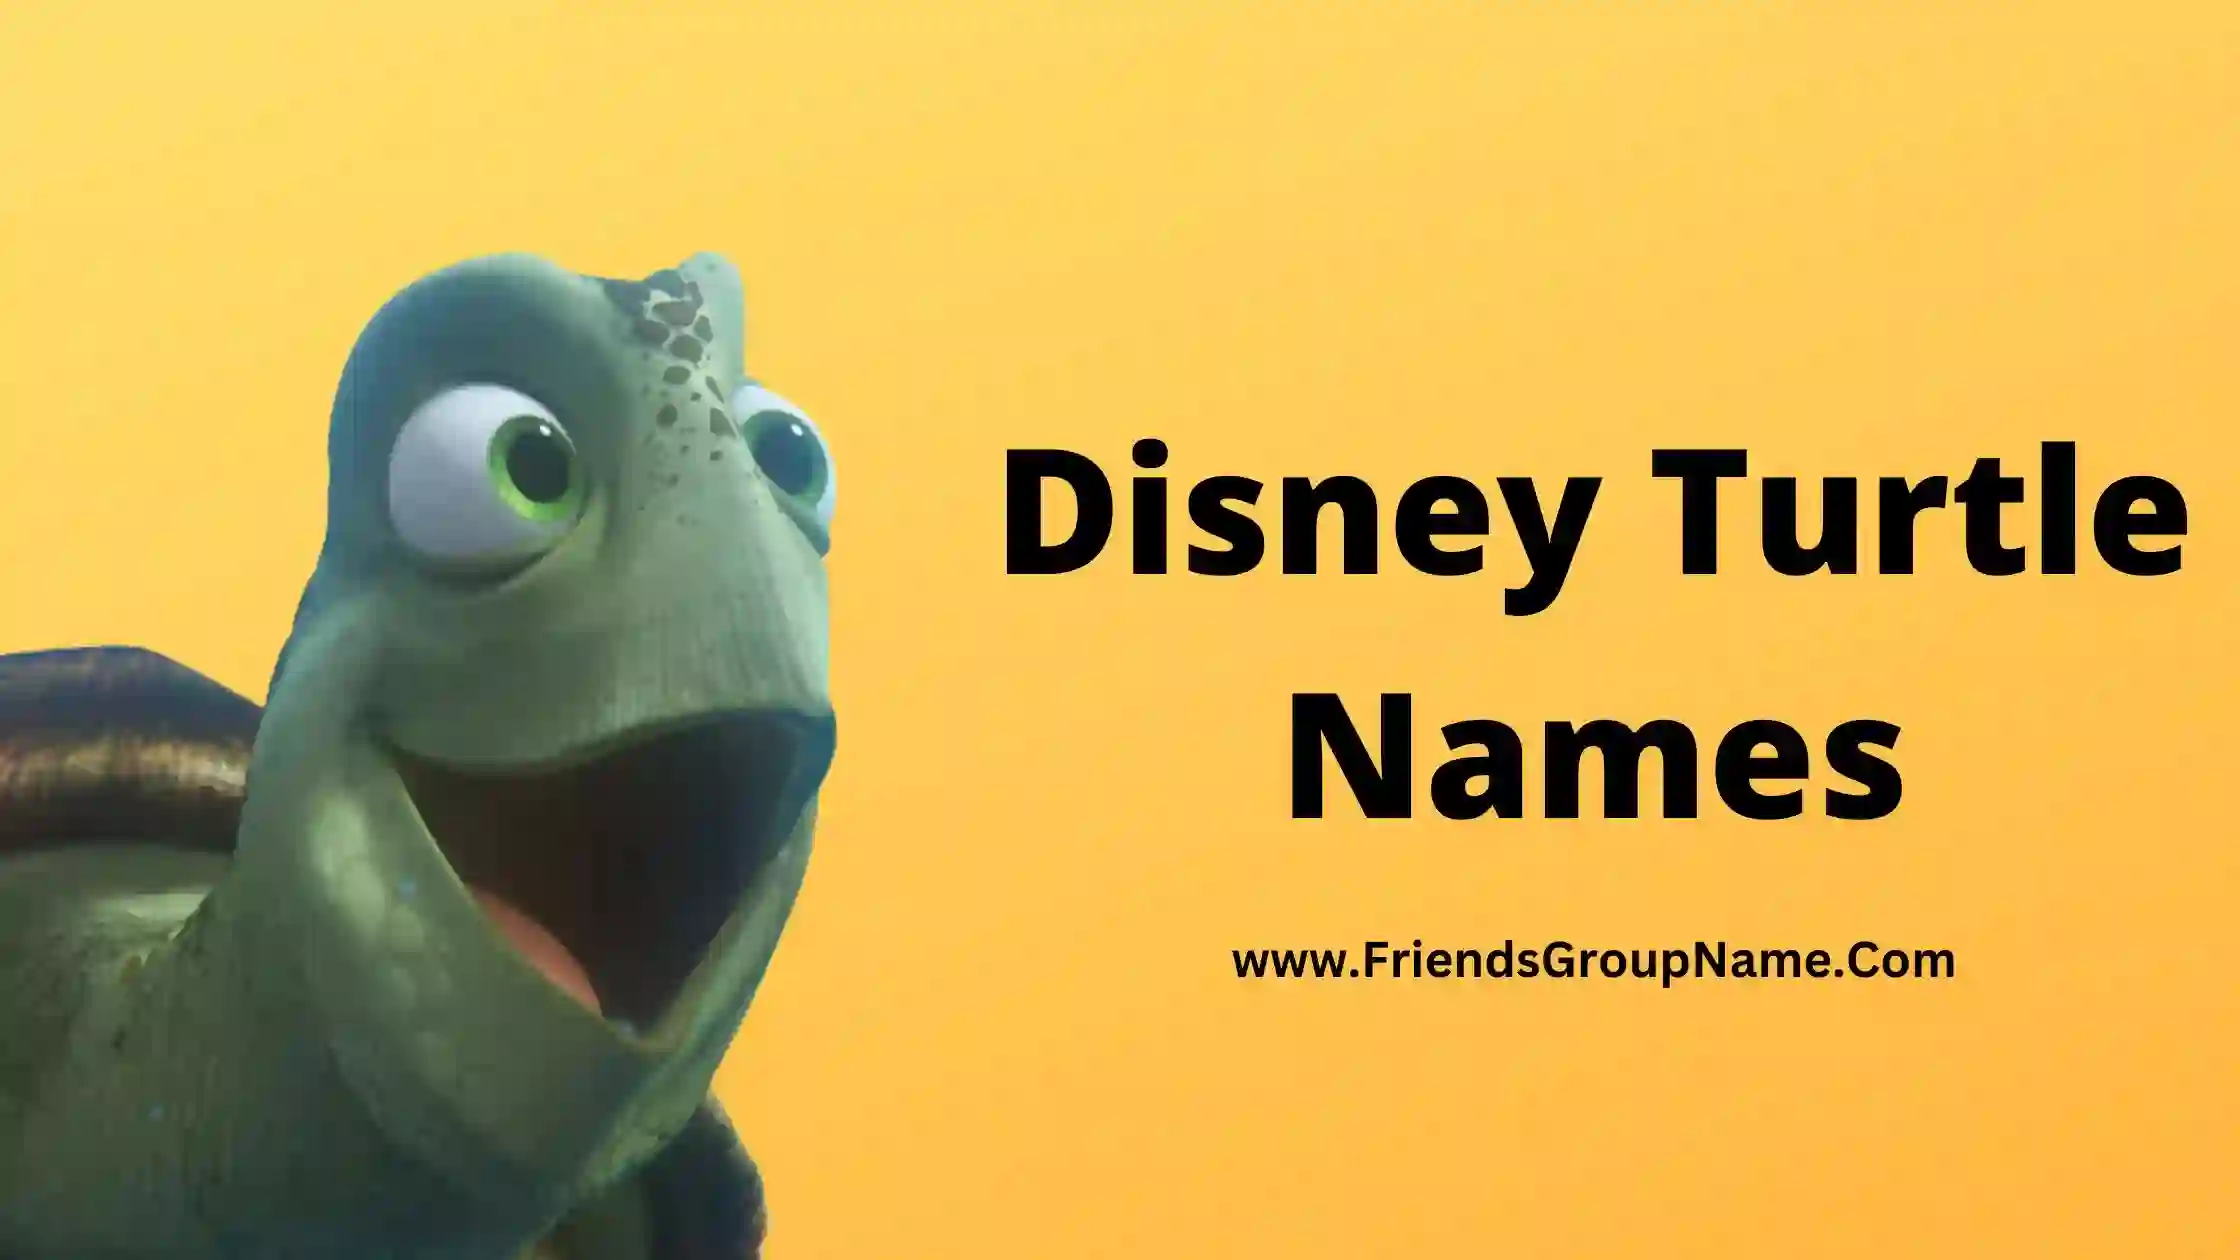 Disney Turtle Names